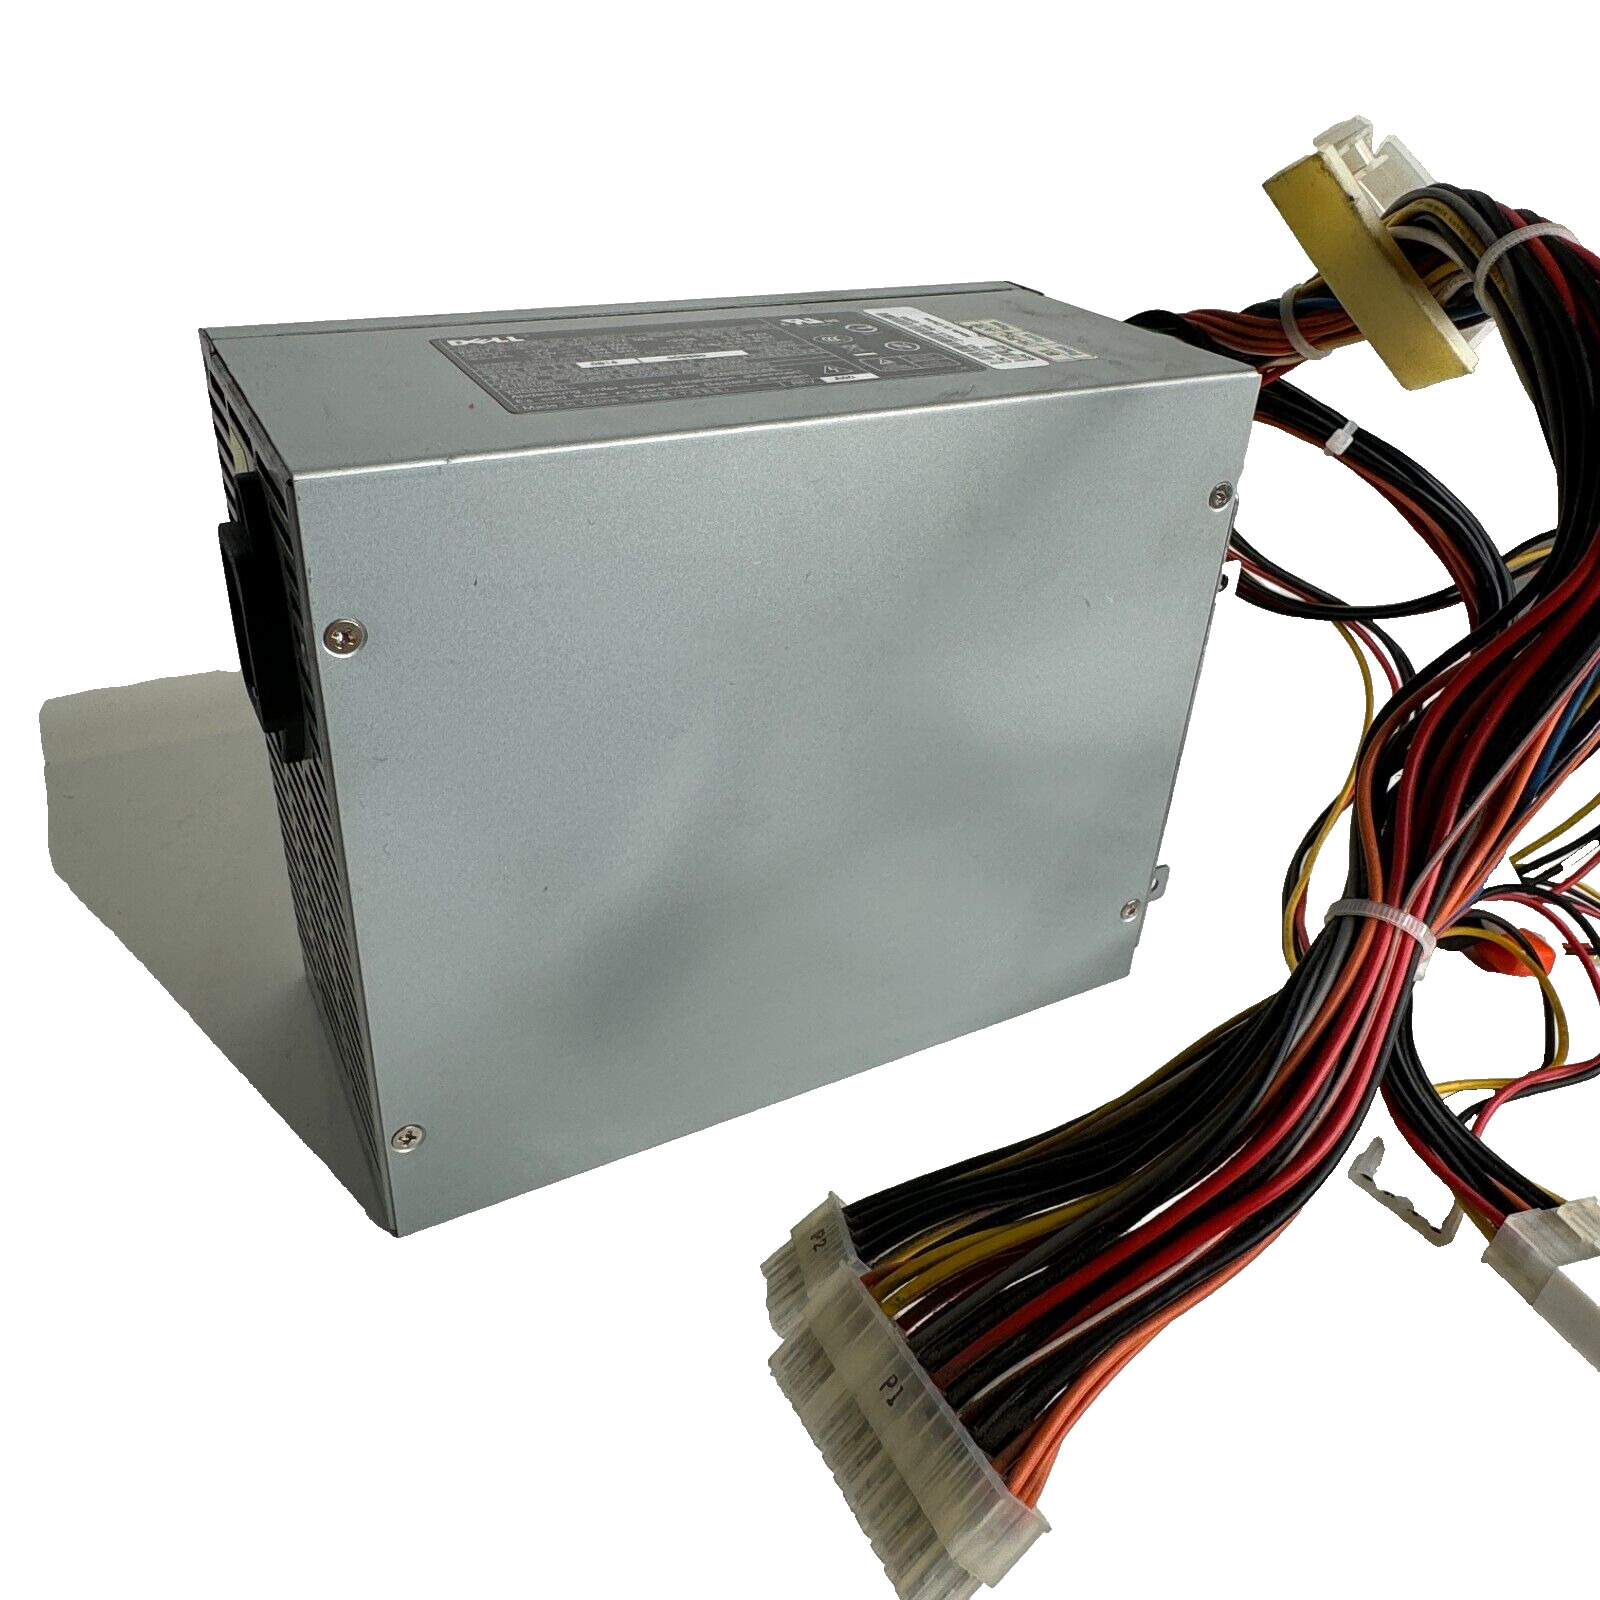 Original PSU For Dell PowerEdge 1800 650W Power Supply PS-5651-1 0TJ785 